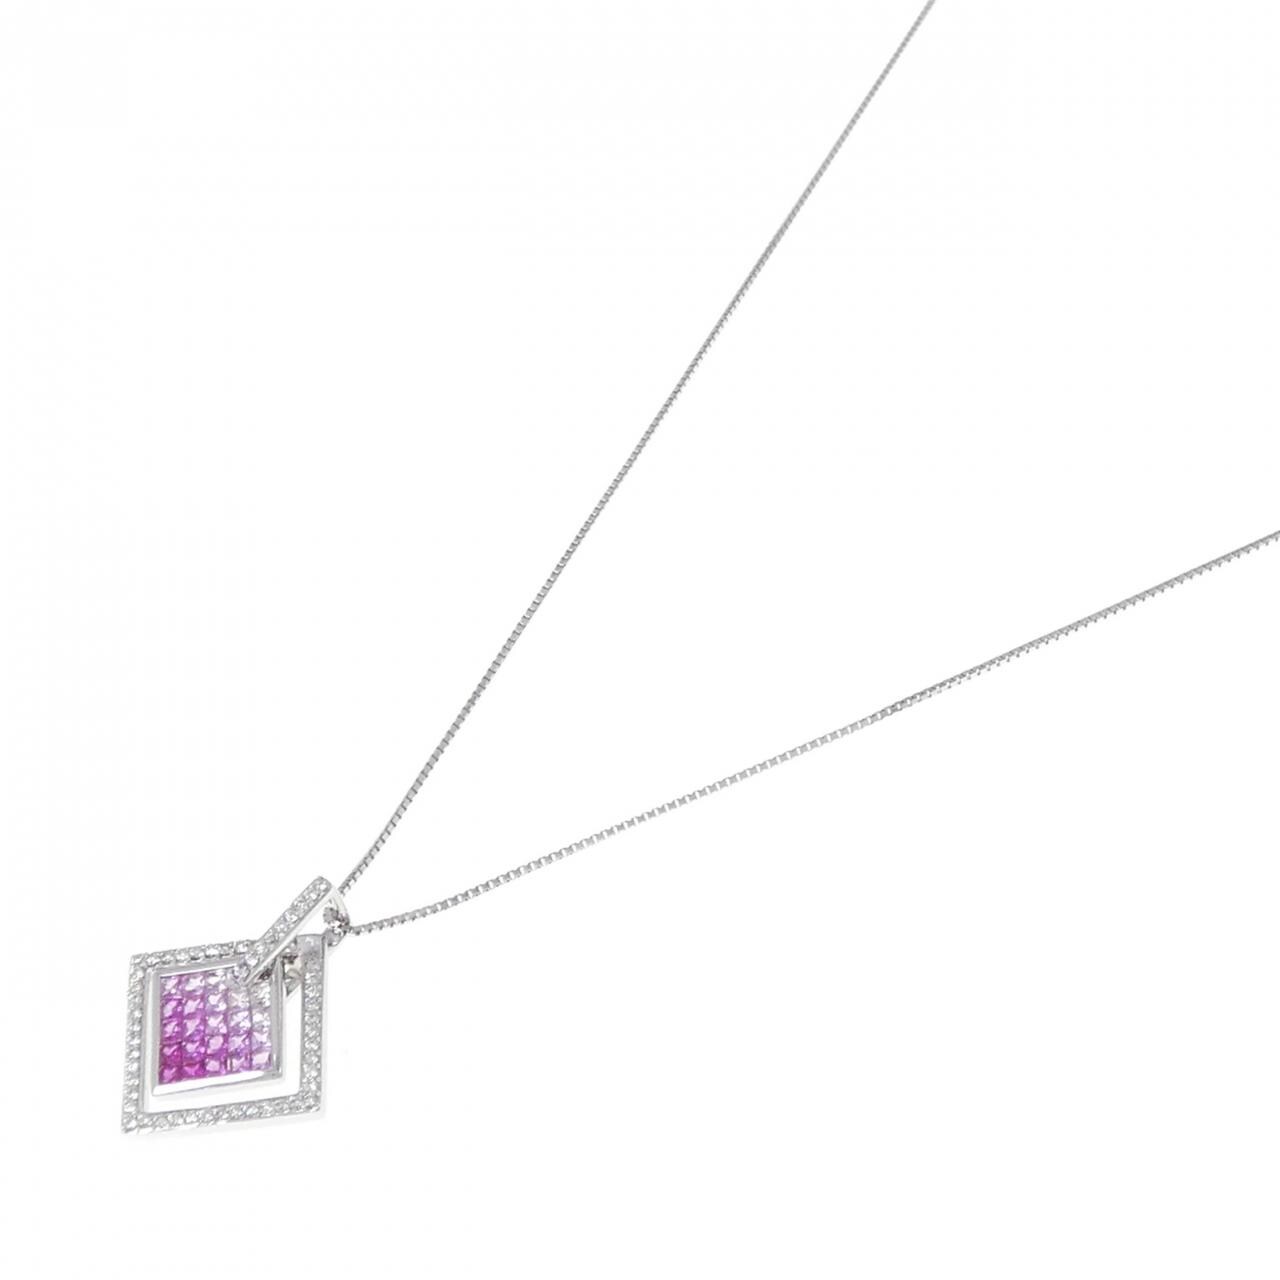 K18WG sapphire necklace 0.80CT